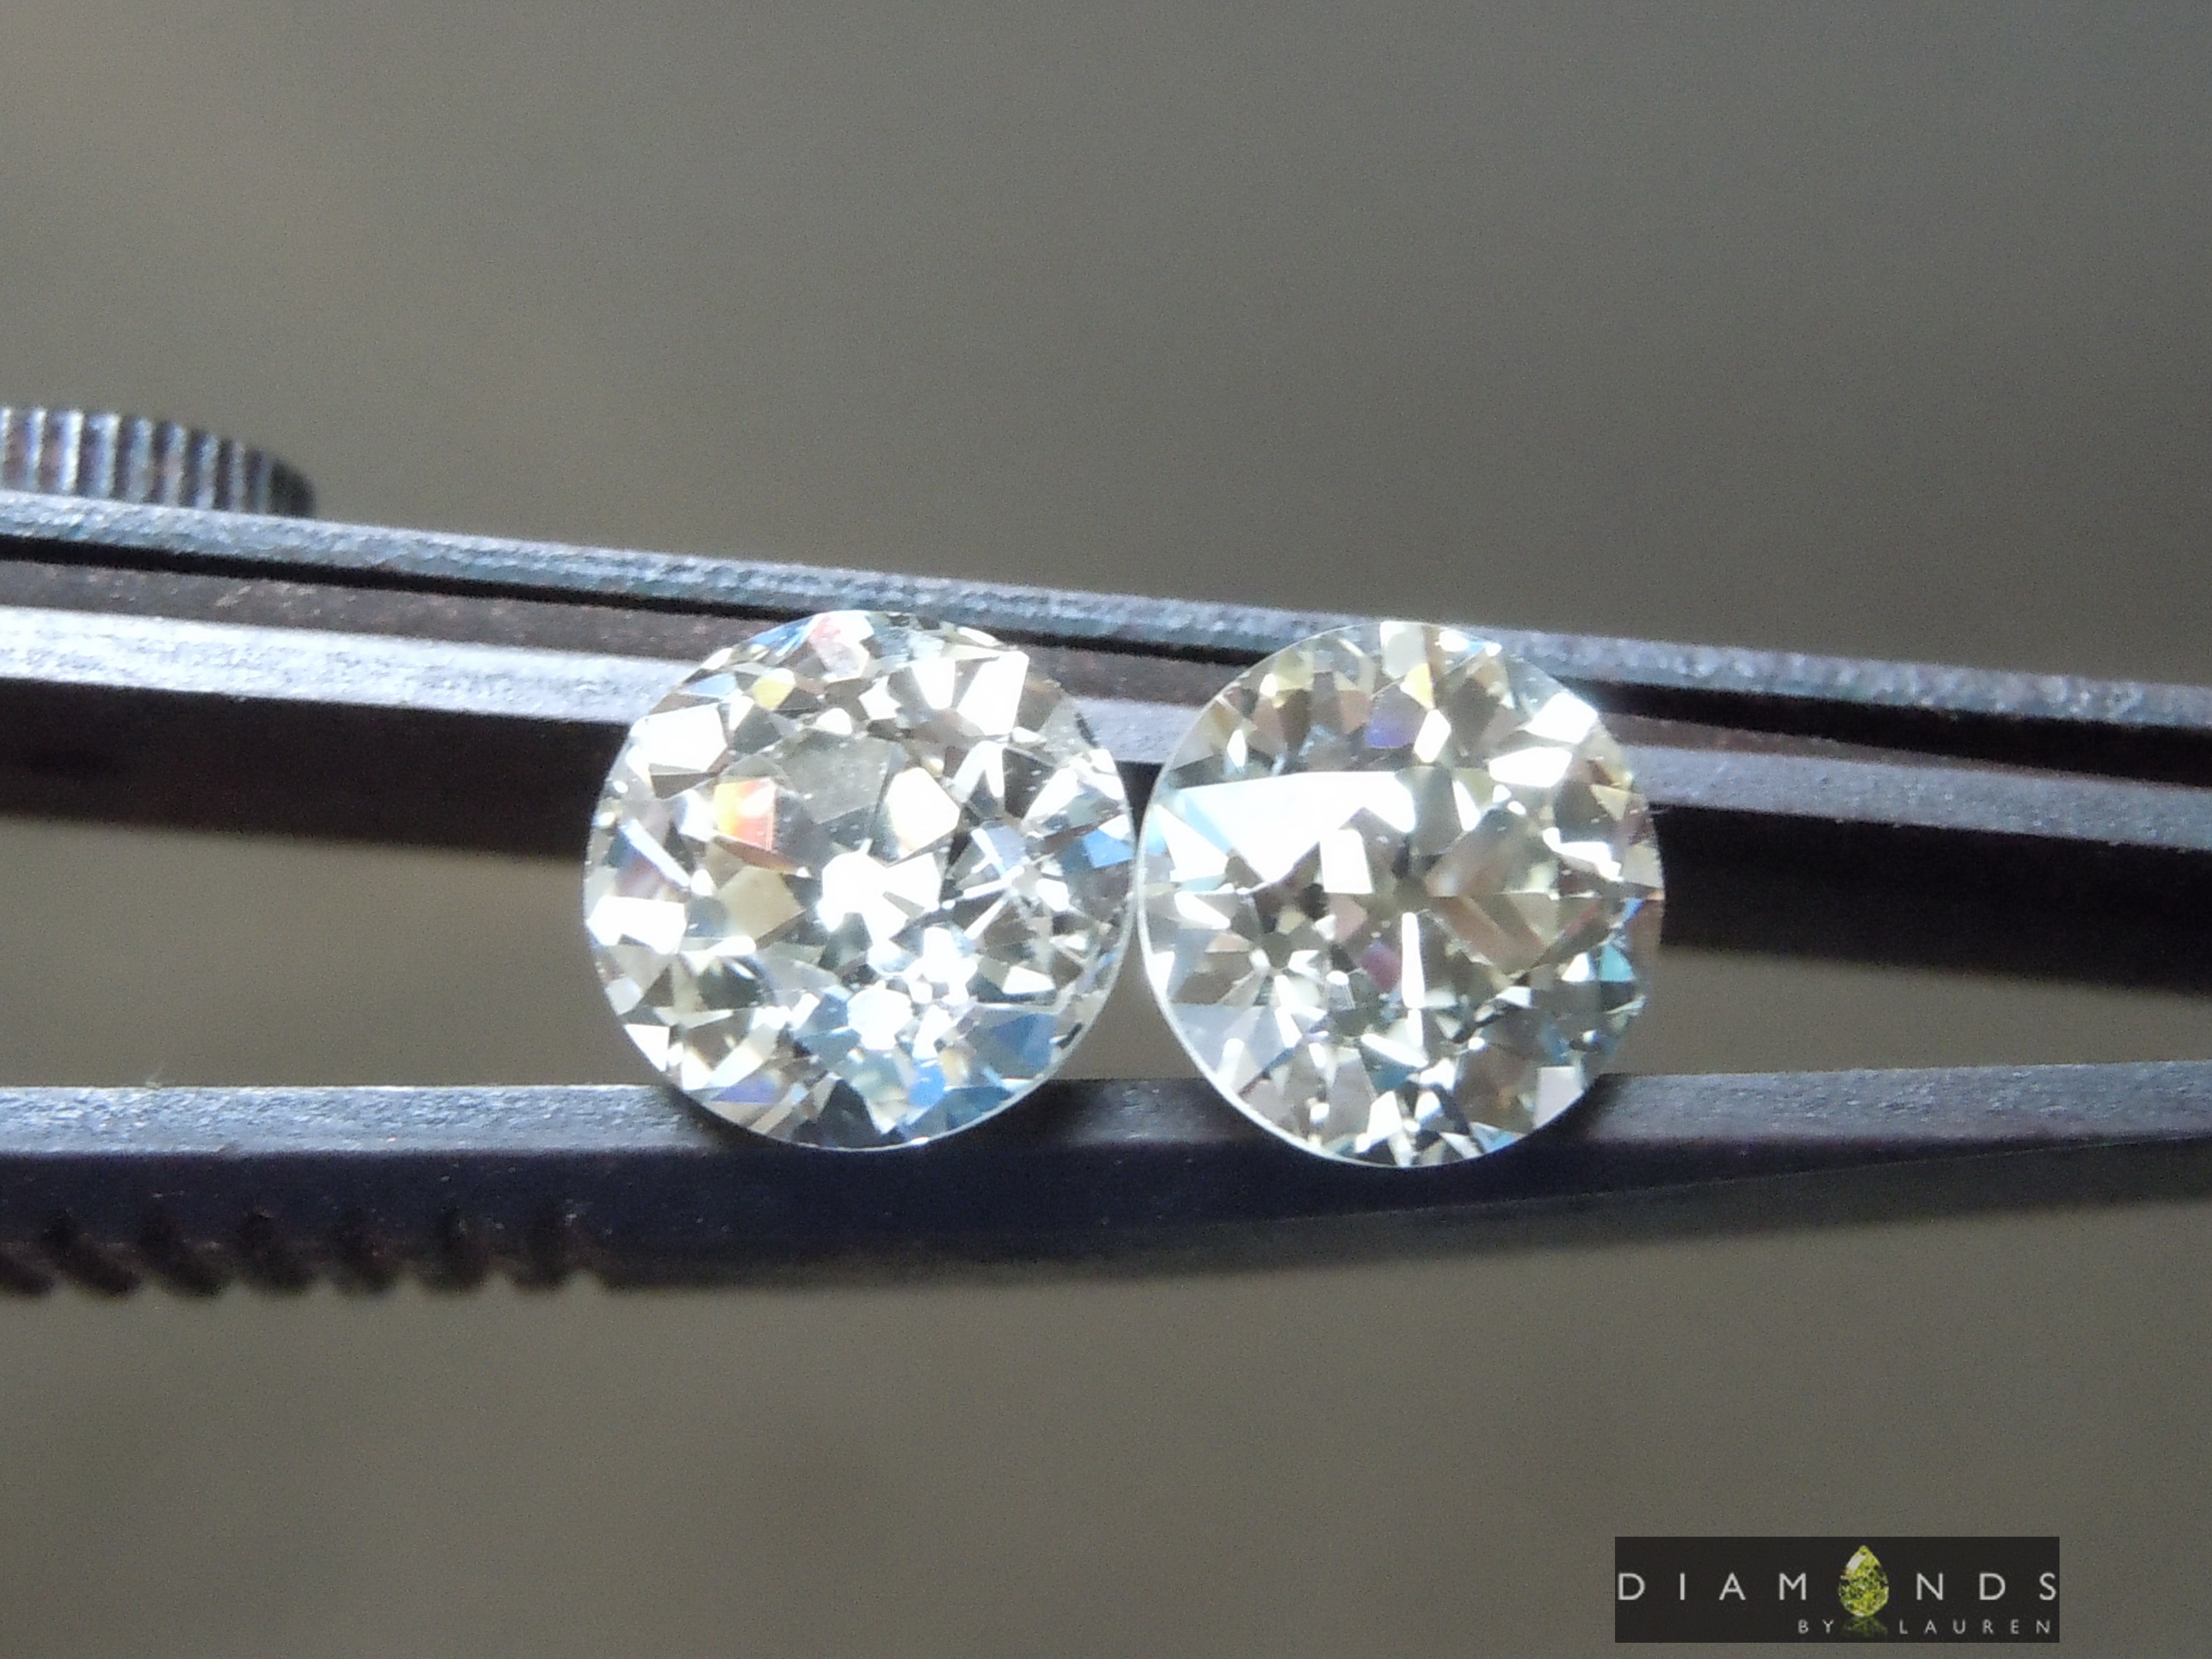 colorless diamond earrings